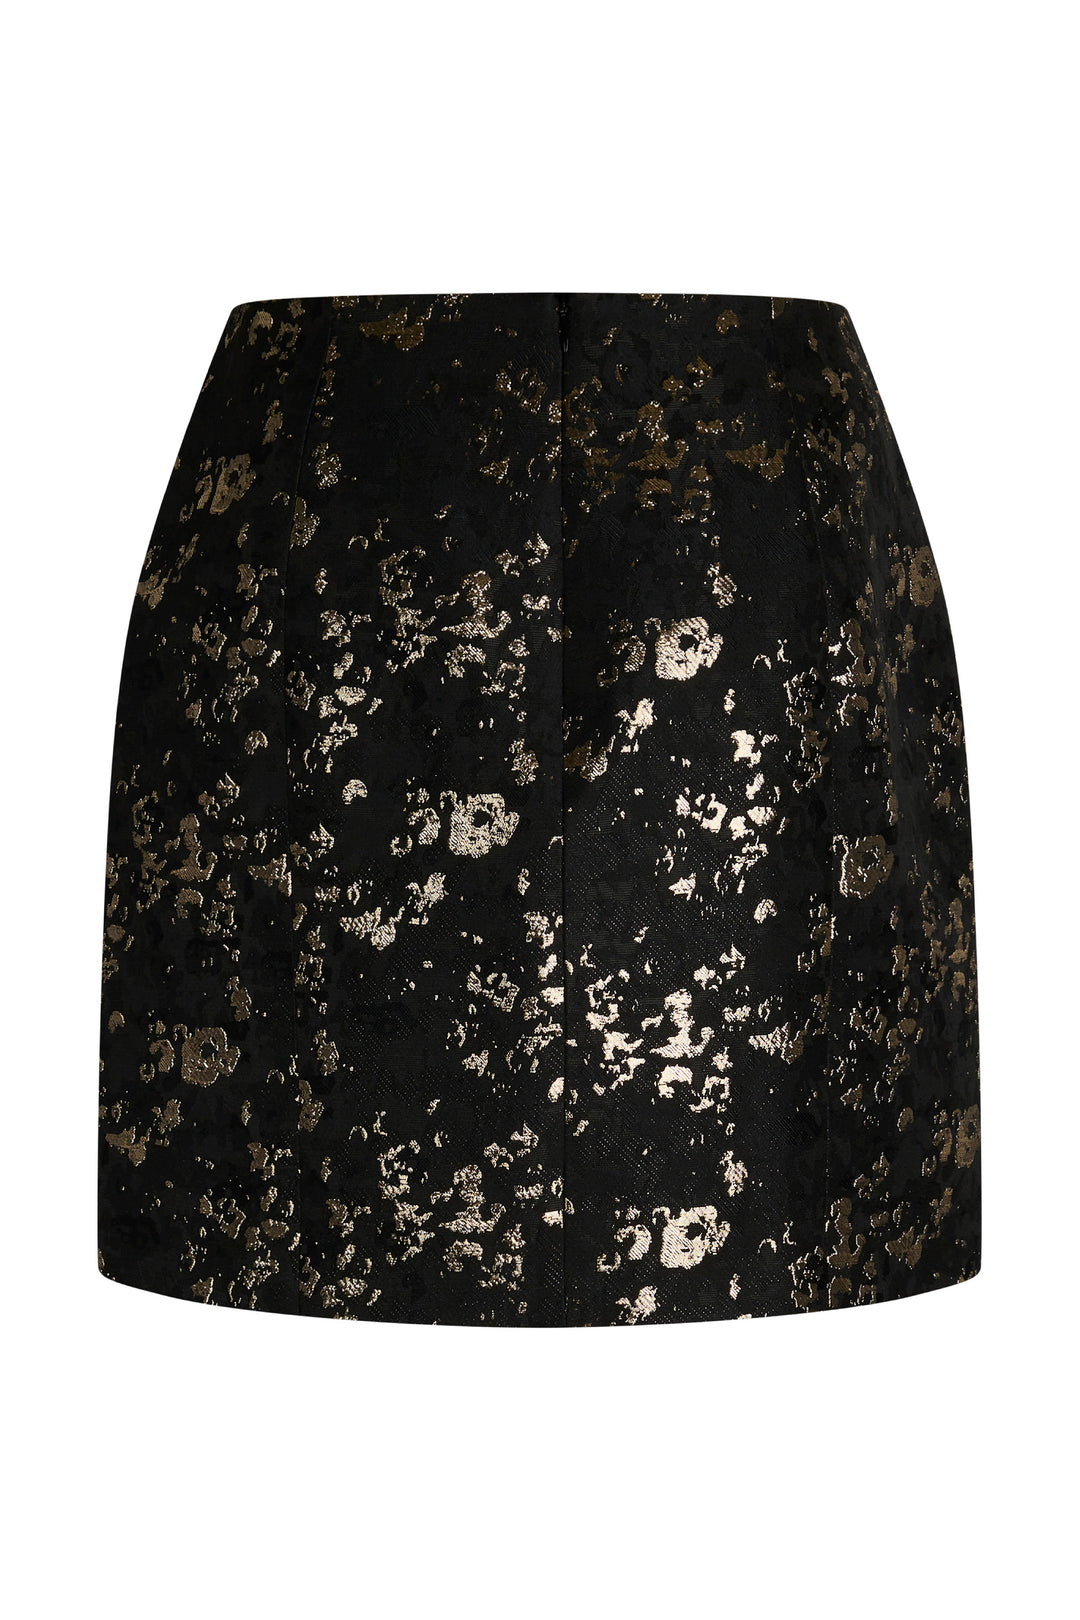 Bruuns Bazaar Women CapeBBSusan skirt Skirt Black/Gold